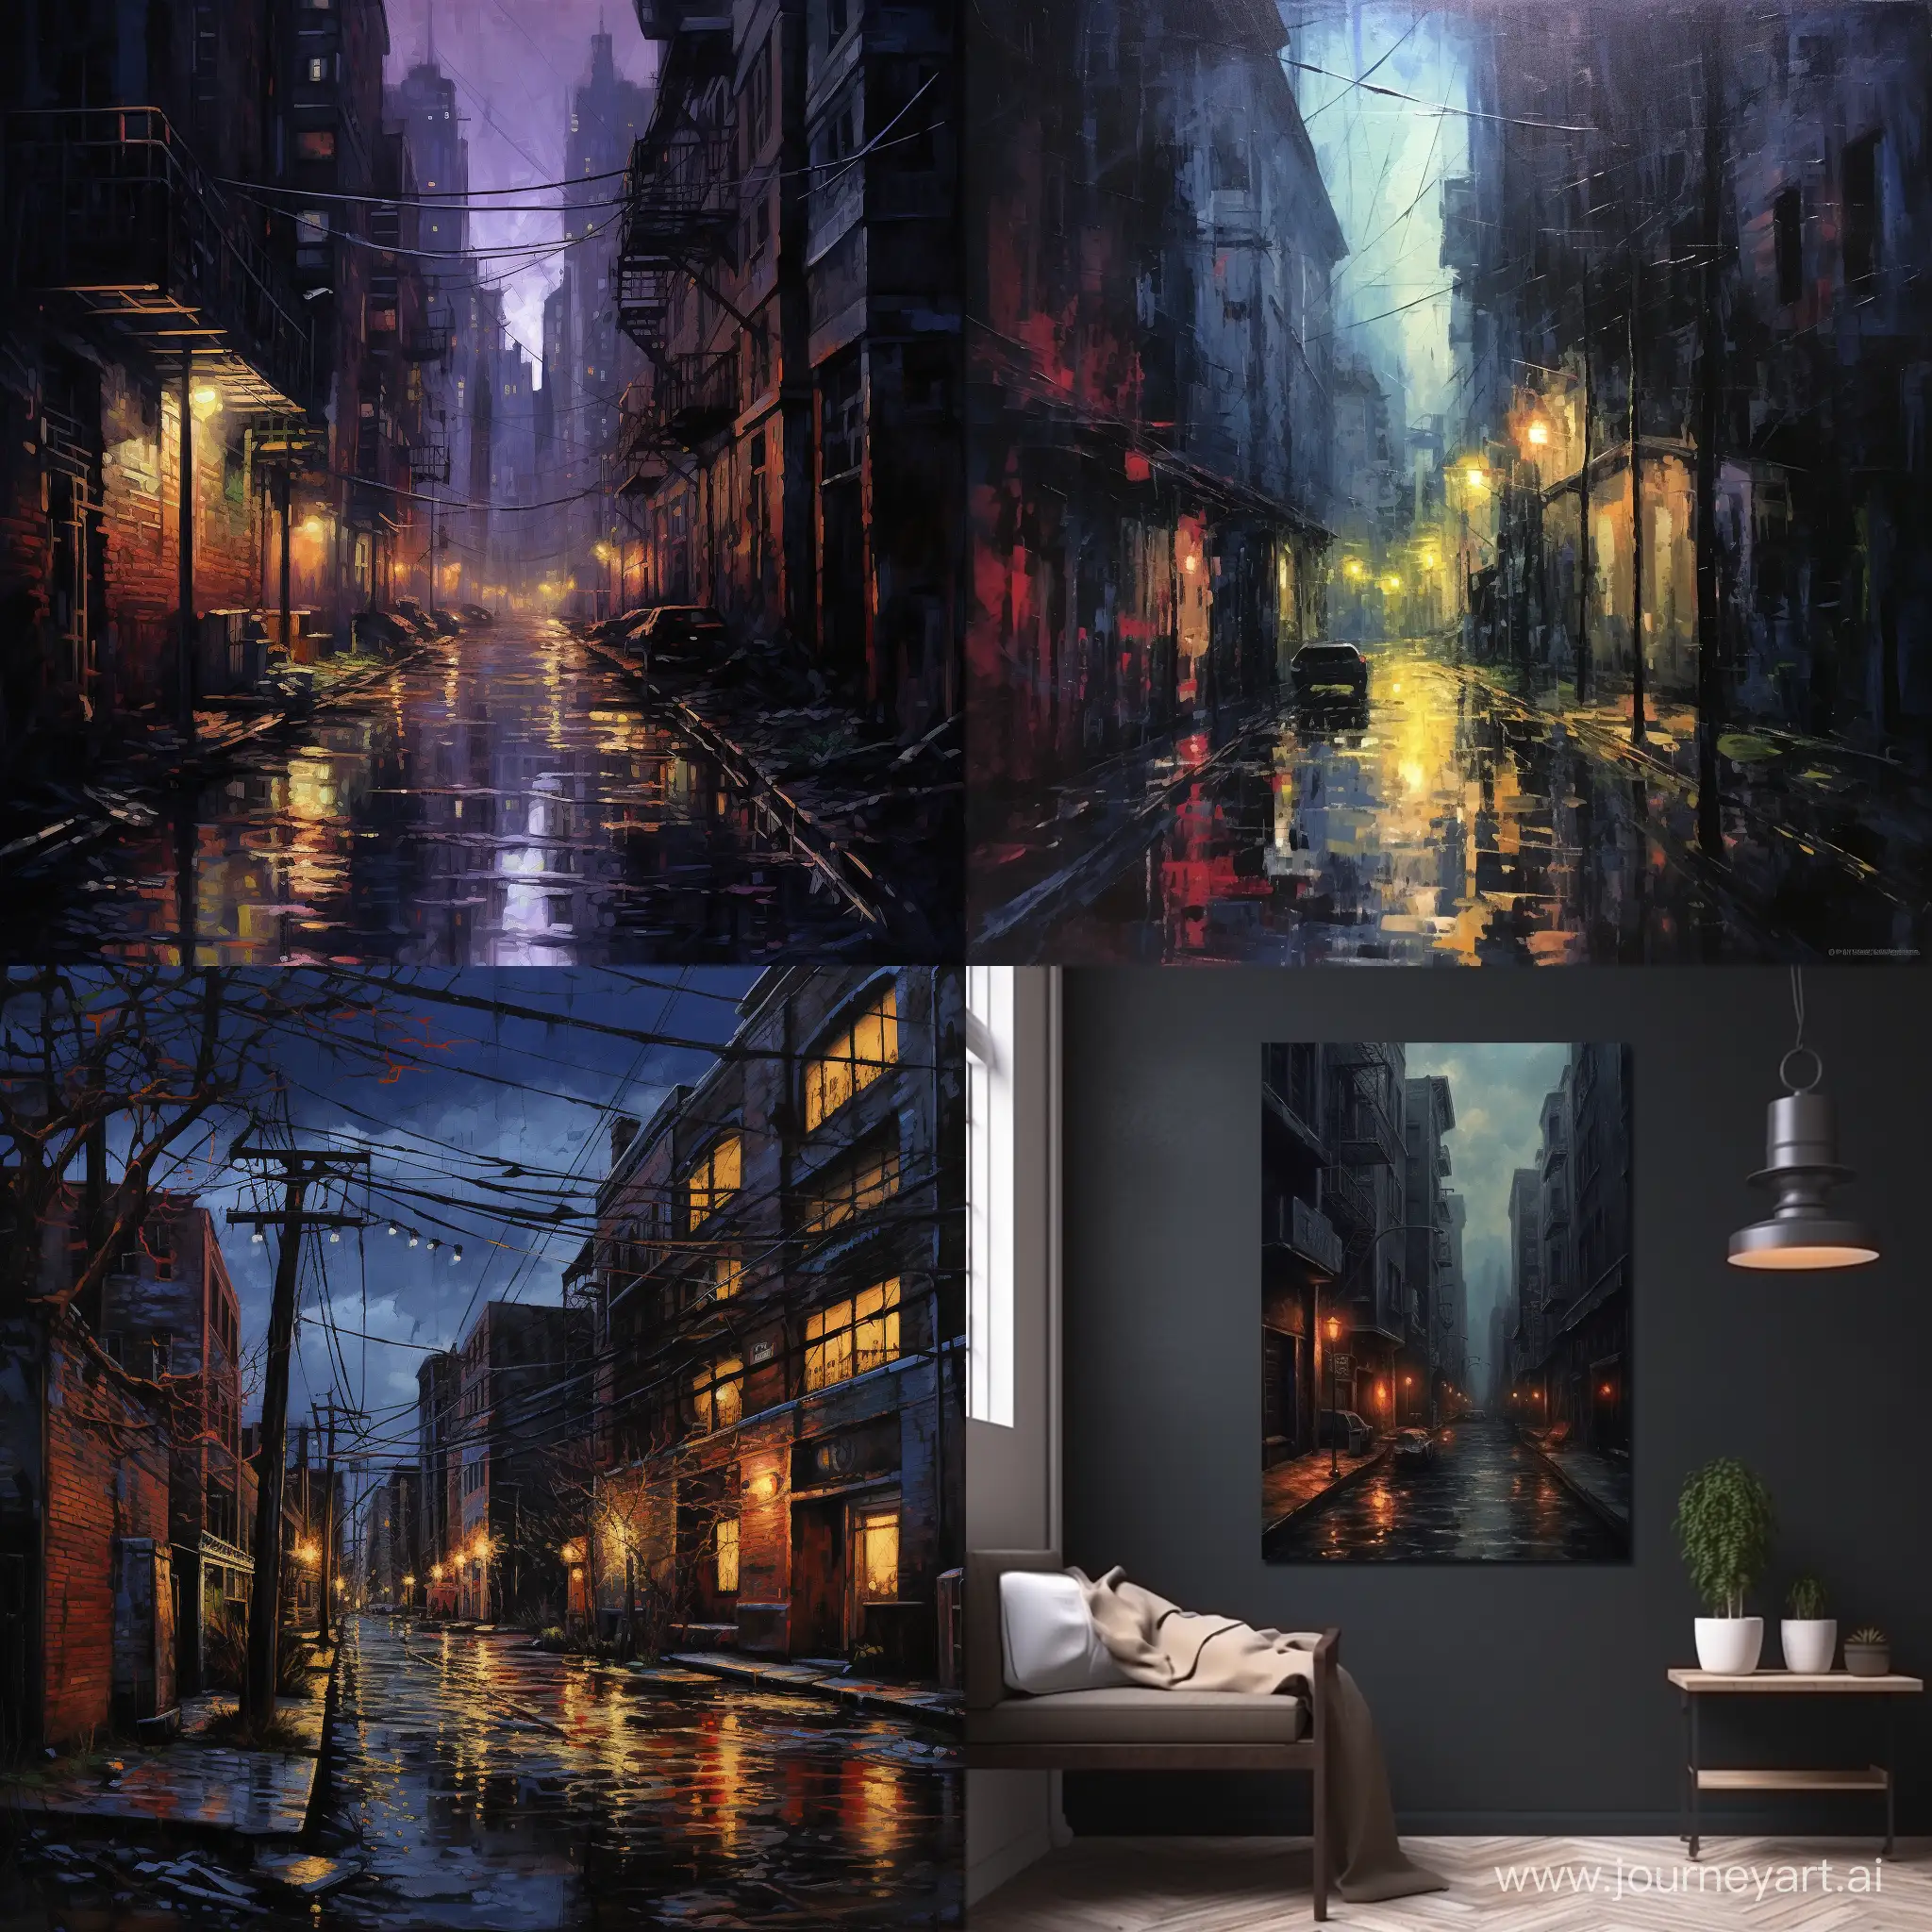 City-Street-Nightlight-Oil-Painting